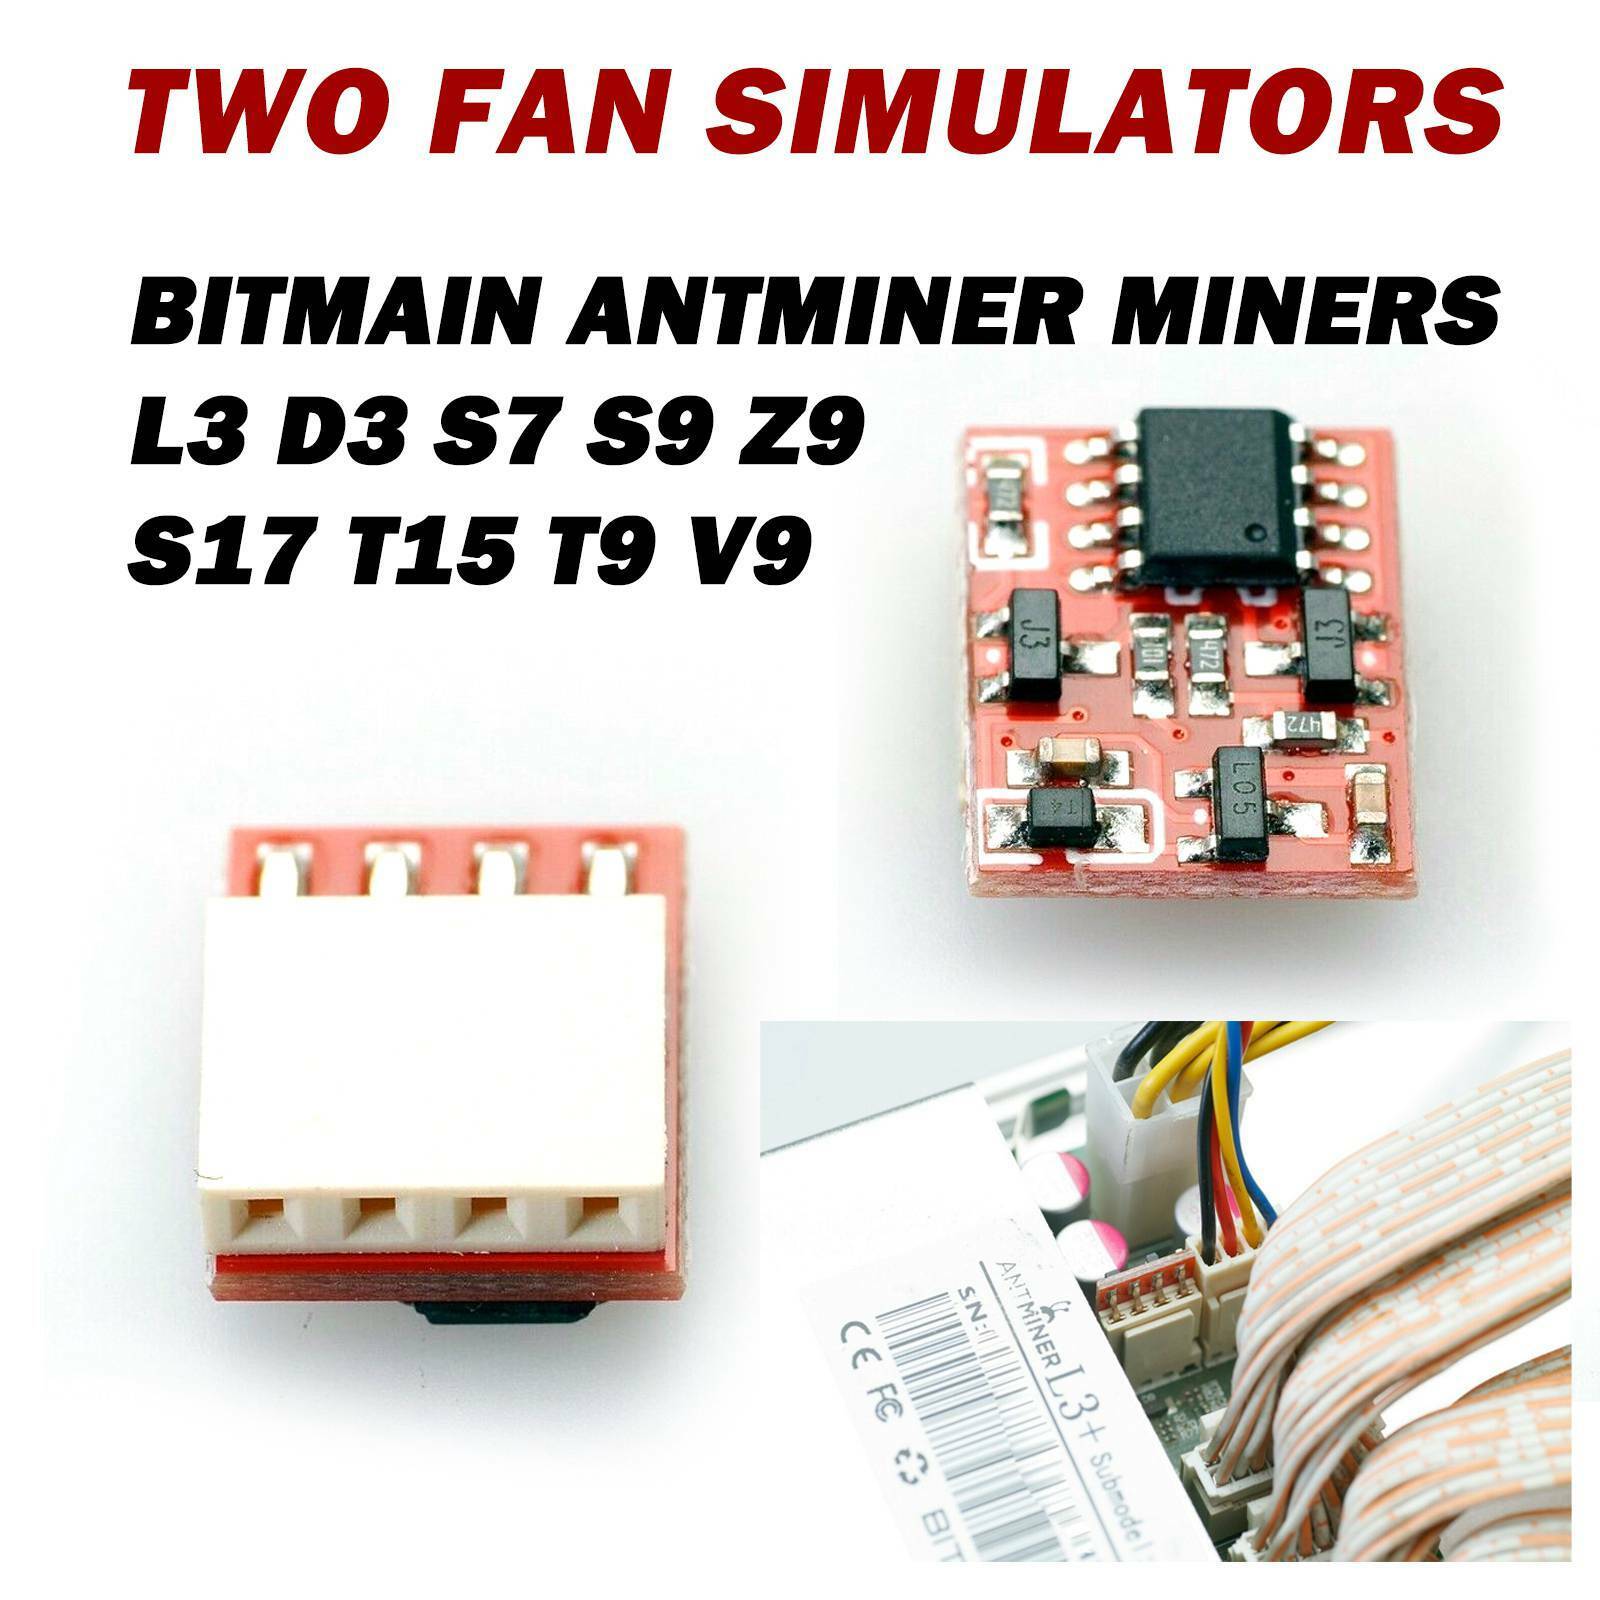 2Pcs Fan Simulators fit Bitmain Antminer Miner L3 D3 S7 S9 Z9 S17 T15 T9 V9 Unbranded Does not apply - фотография #8